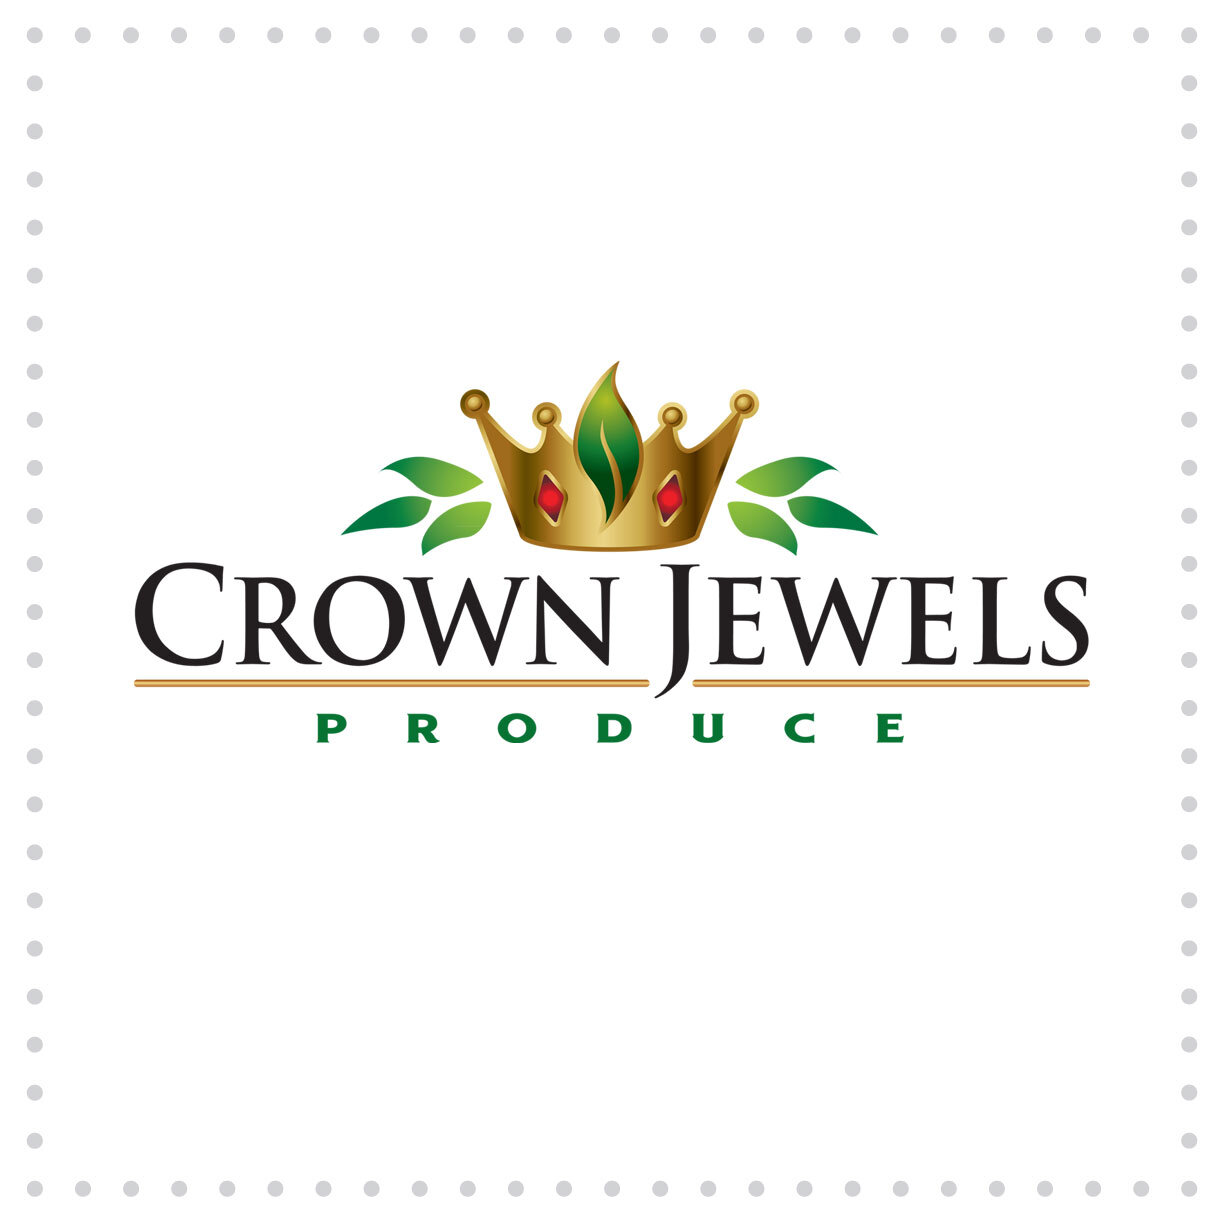 Ball-LogoDesign-CrownJewels.jpg